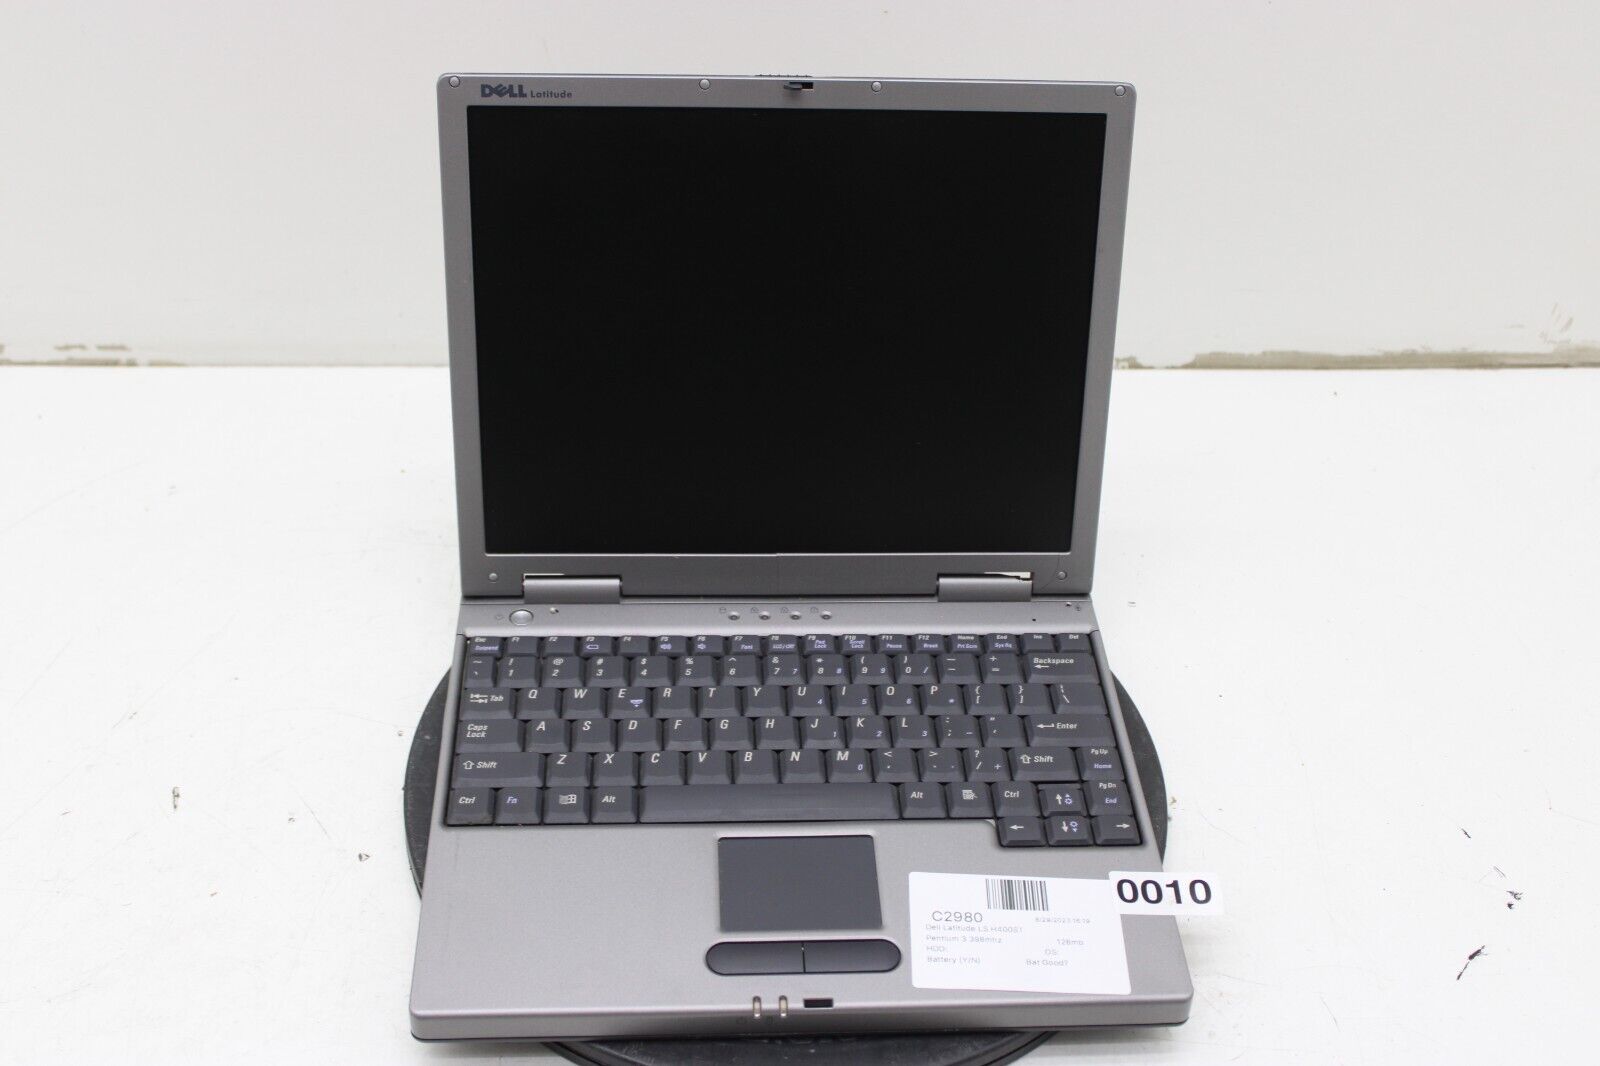 Dell Latitude LS H400ST Laptop Intel Pentium 3 400MHz 128MB Ram No HDD / Battery